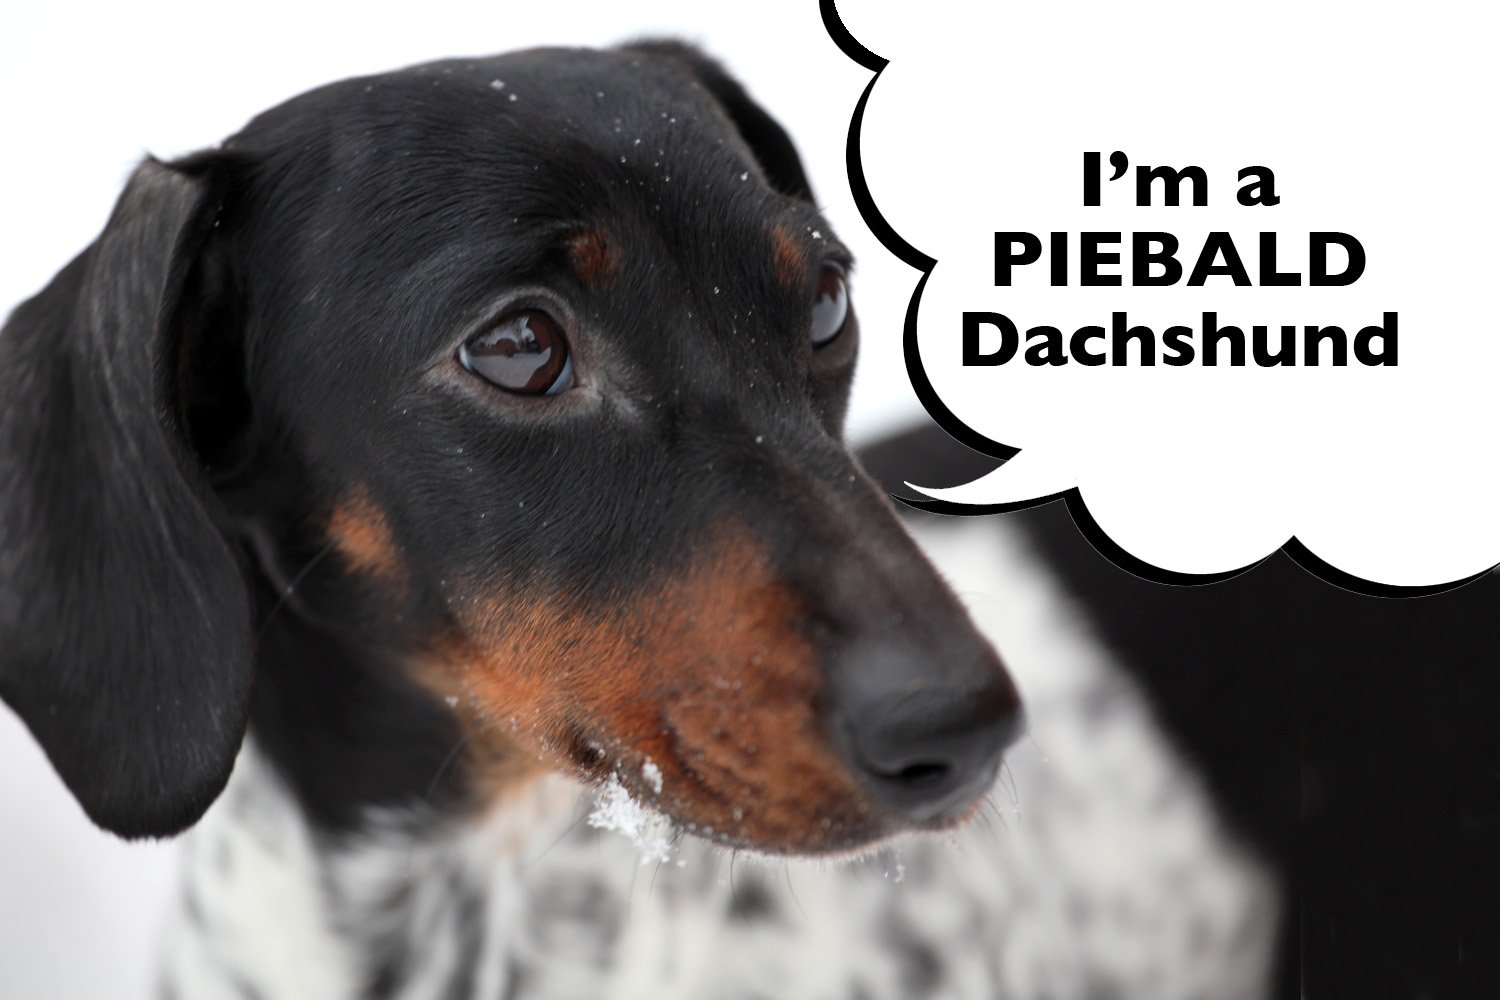 What Is A Piebald Dachshund?